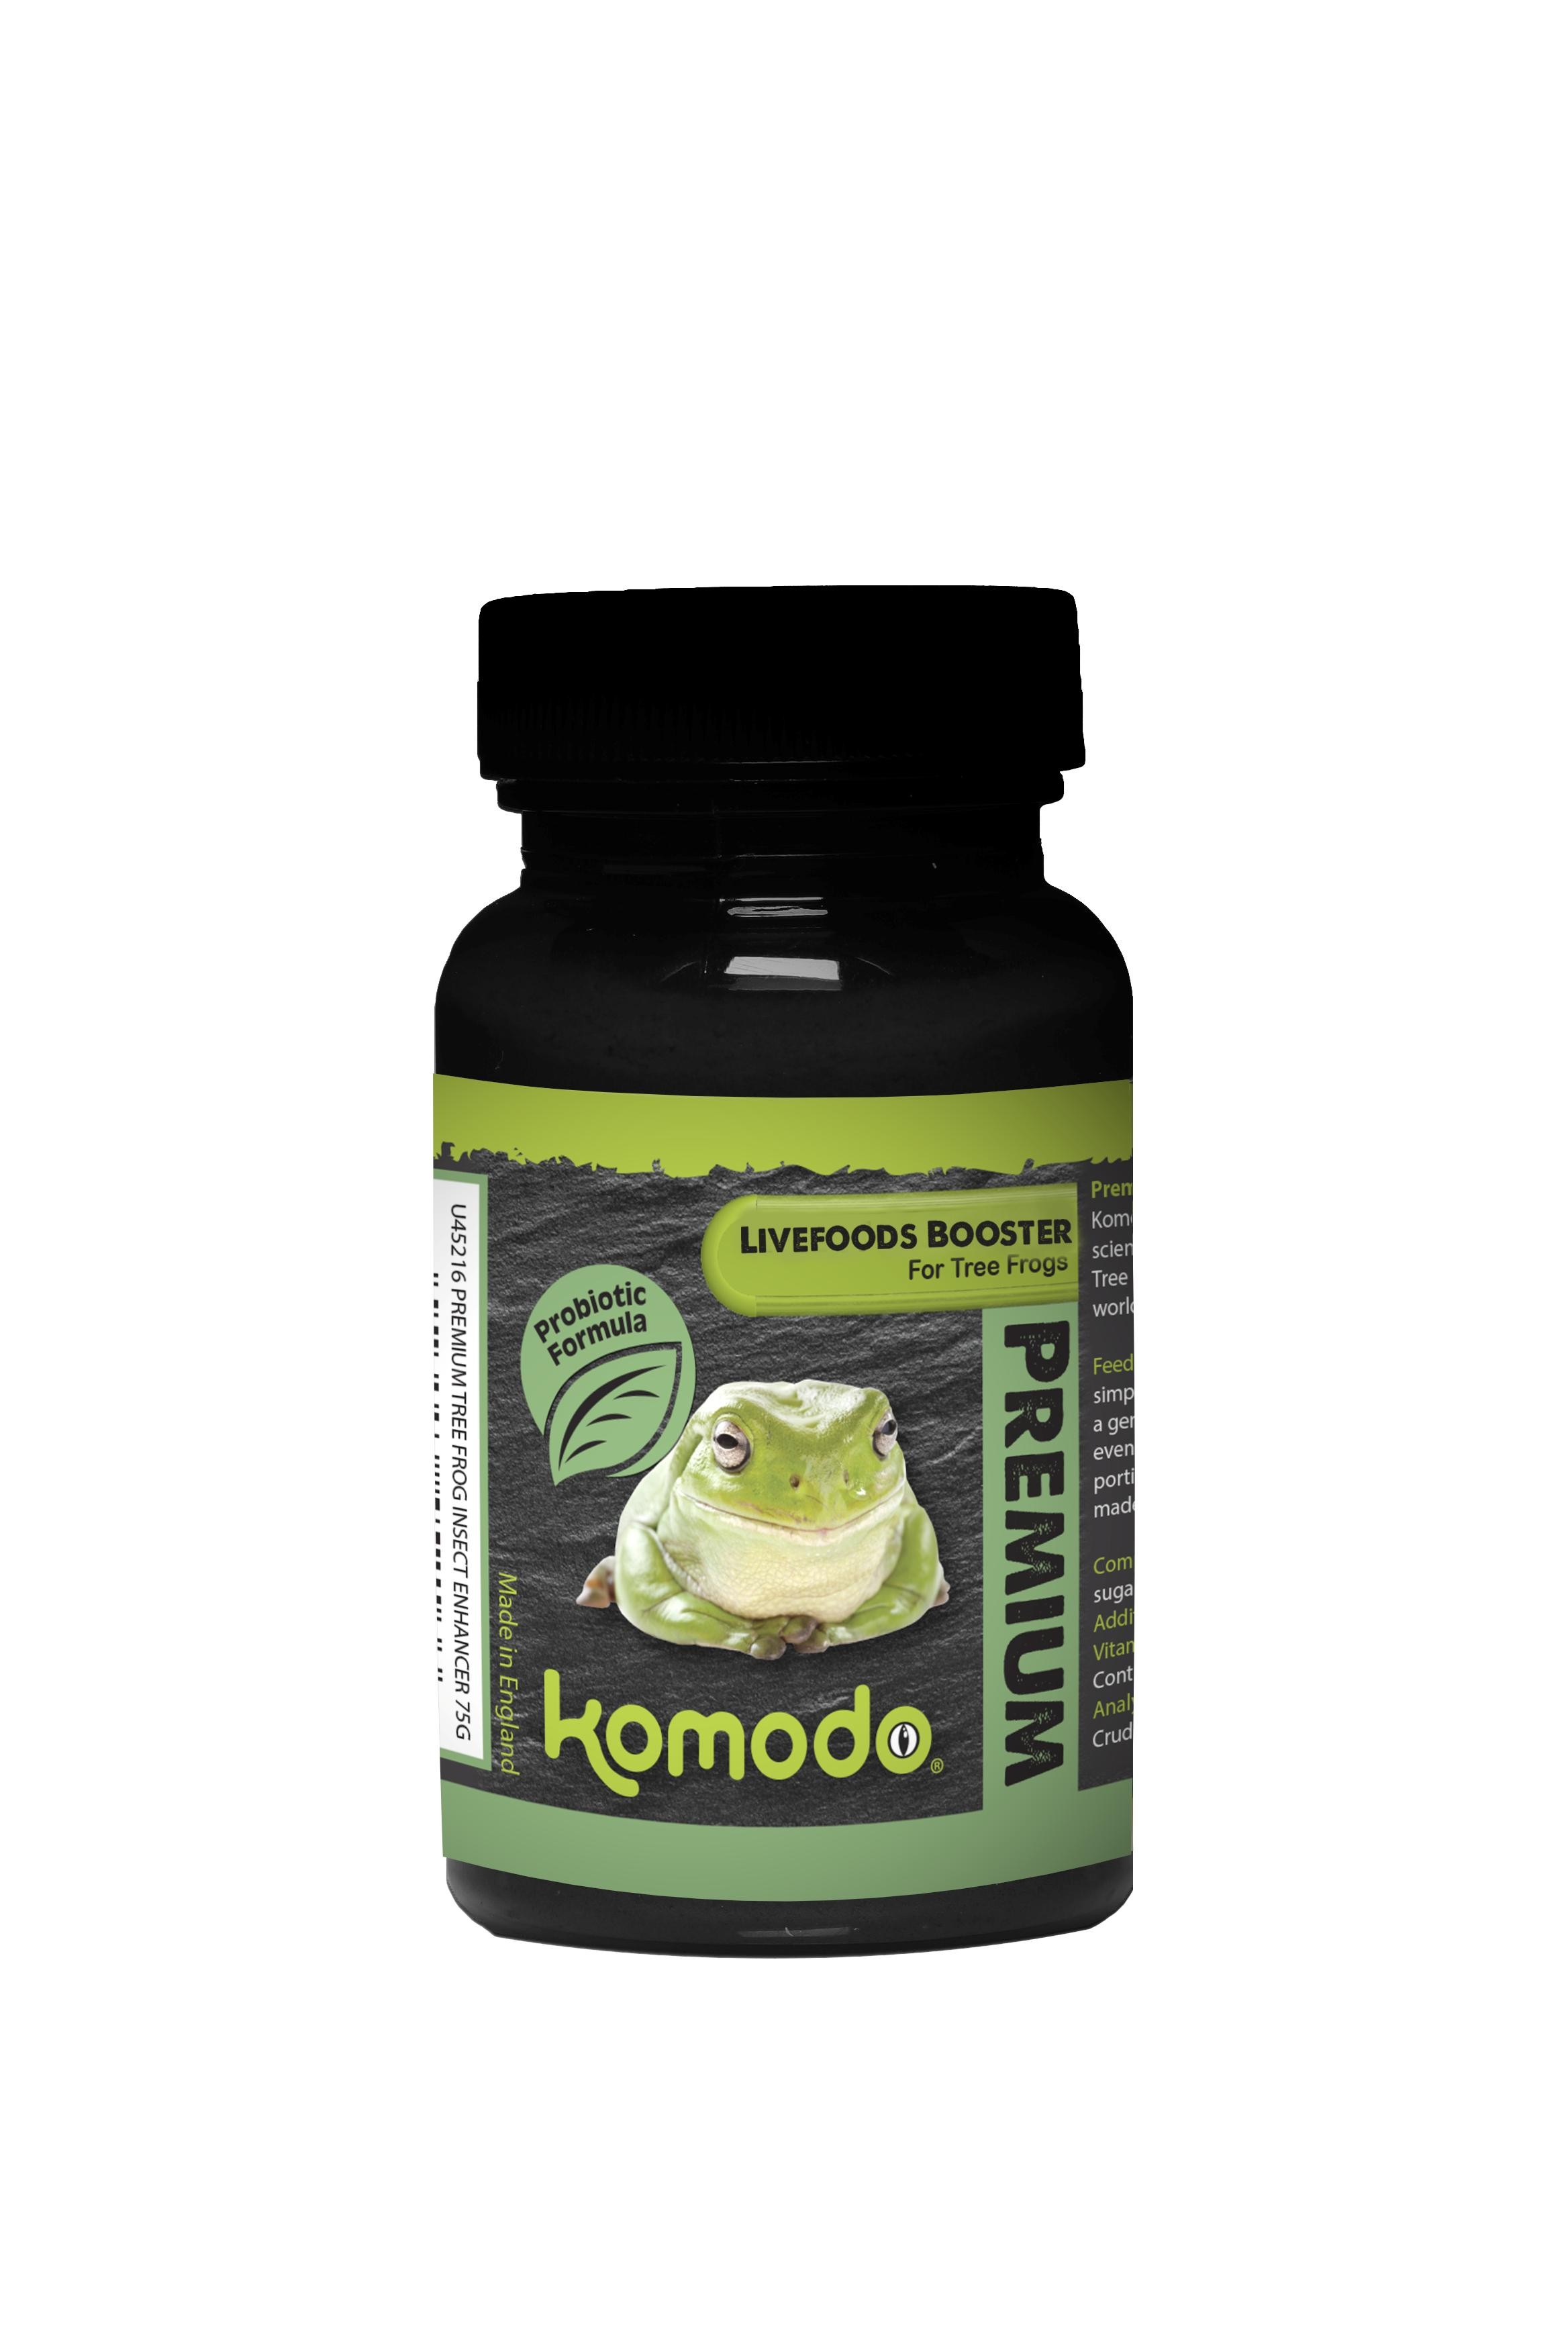 Komodo Treefrog Insect Dust Powder U45216